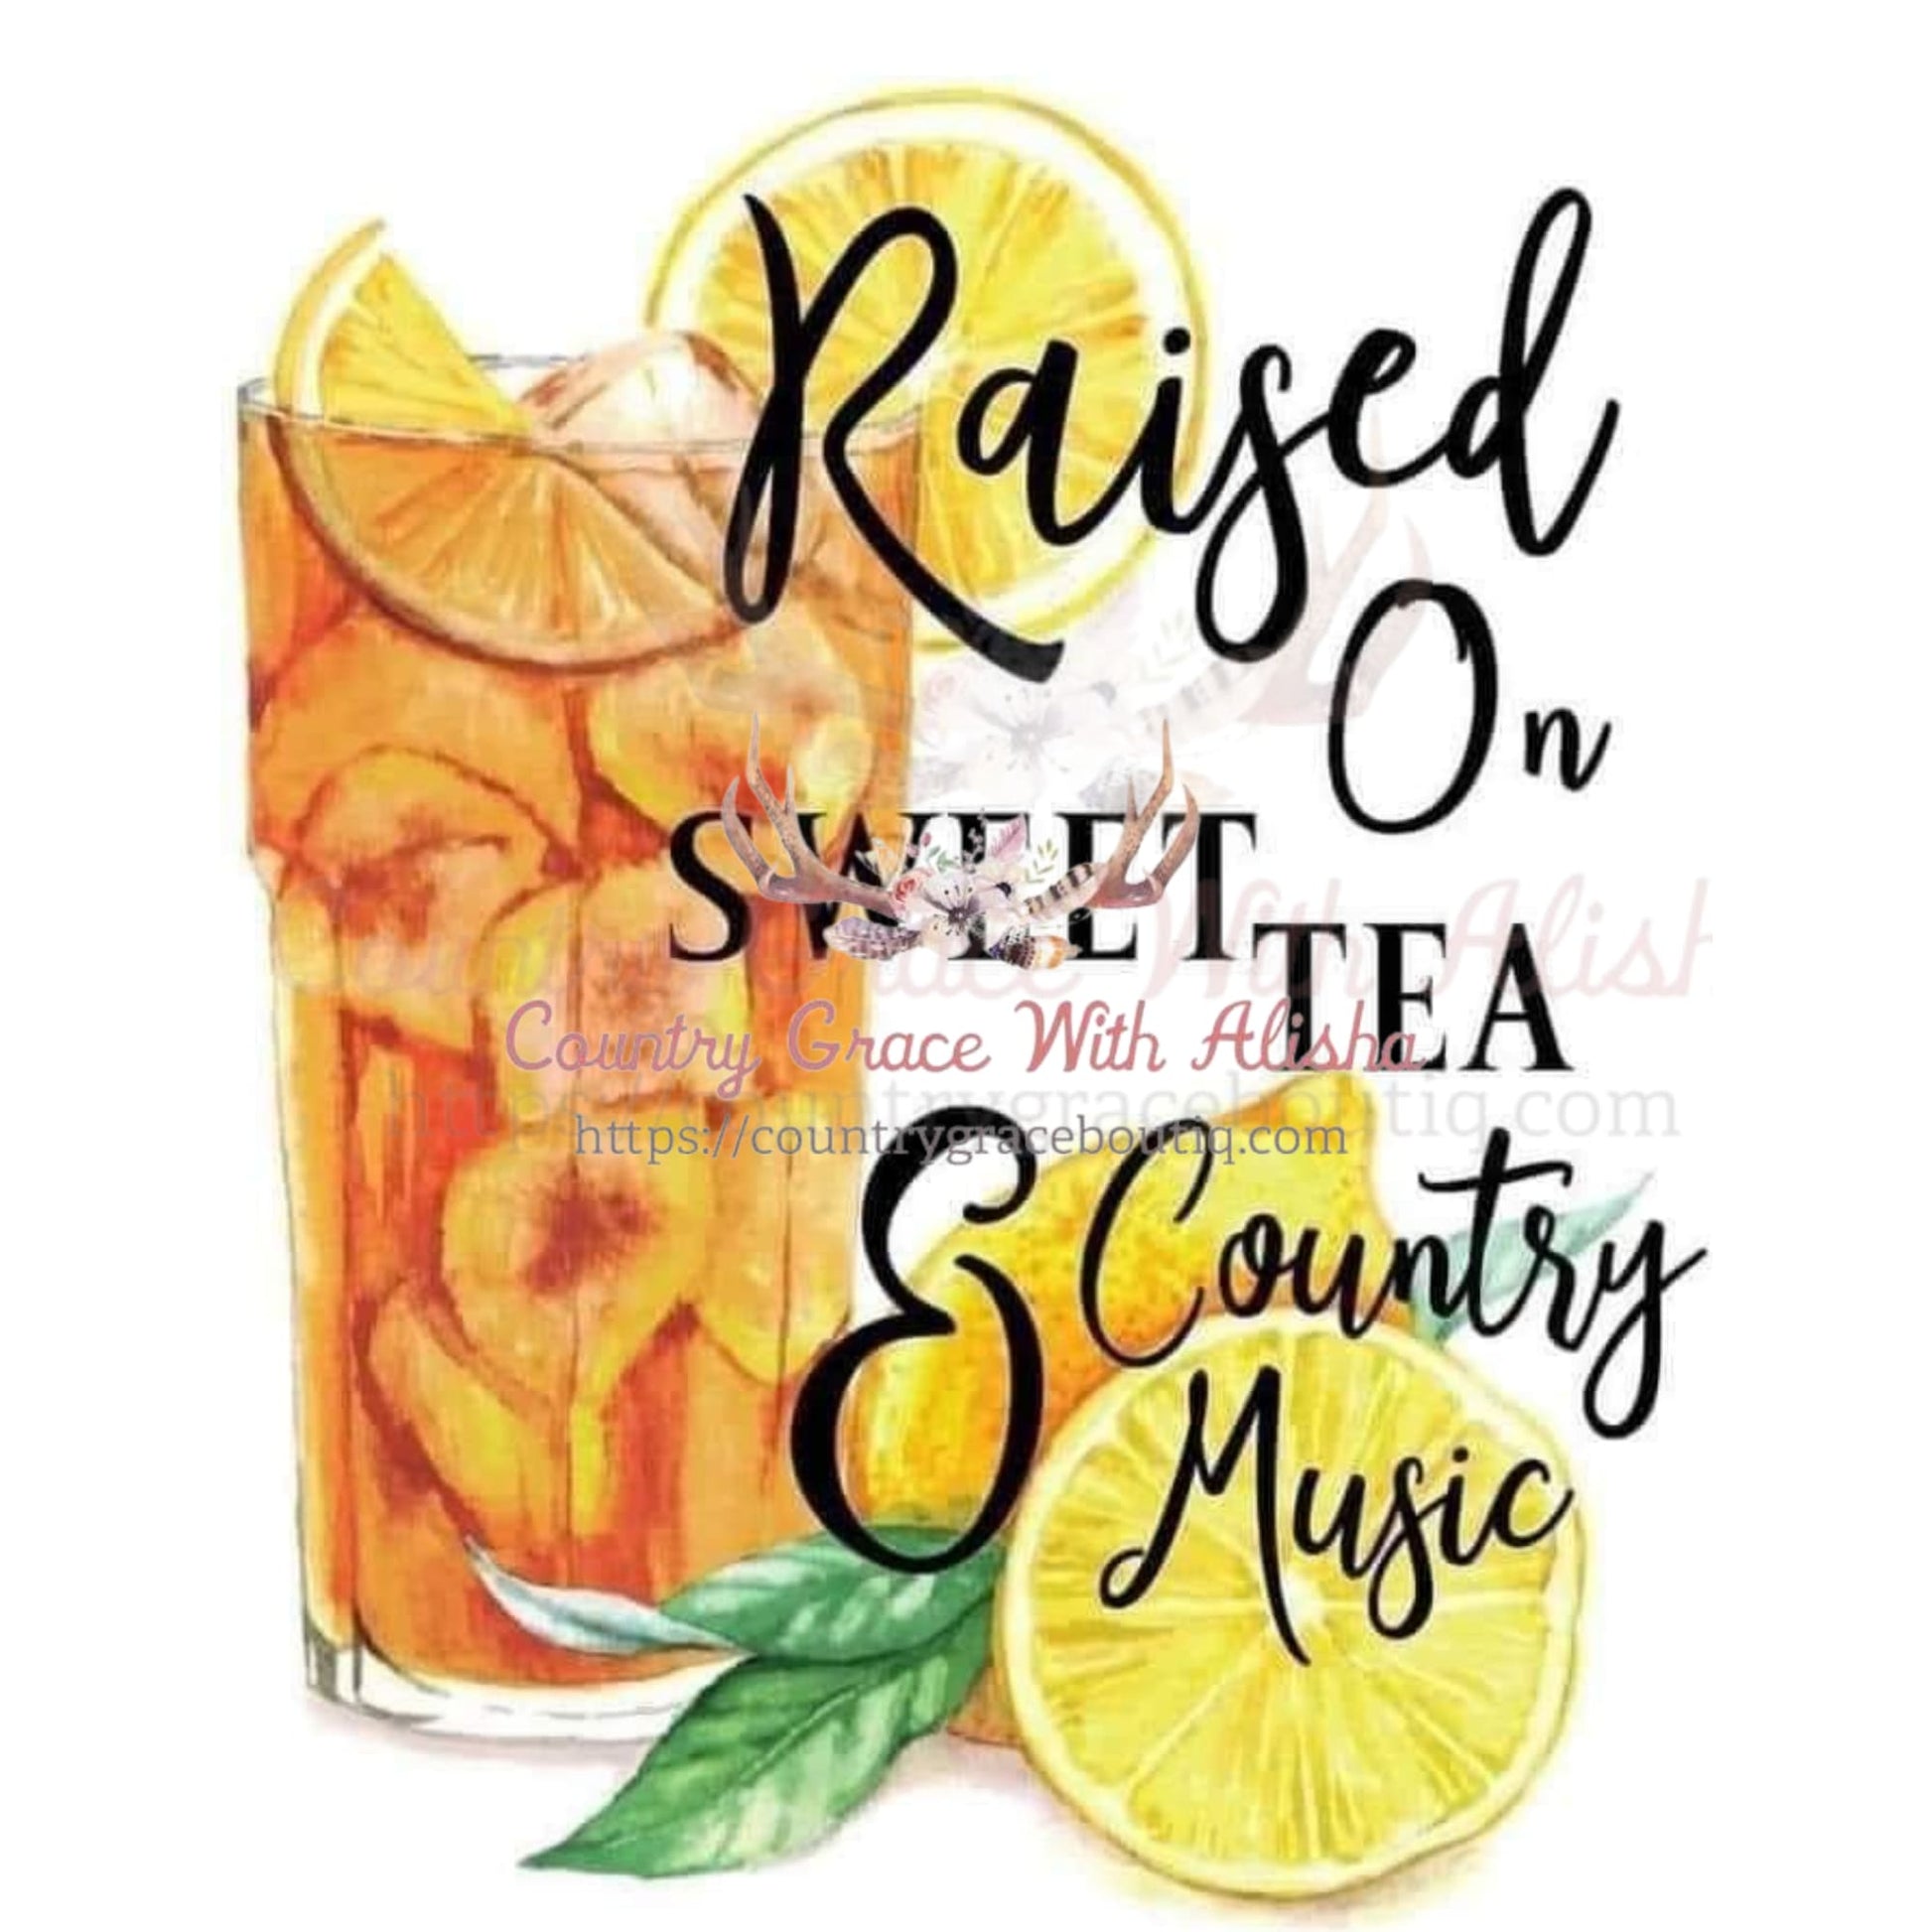 Raised On Sweet Tea Sublimation Transfer - Sub $1.50 Country